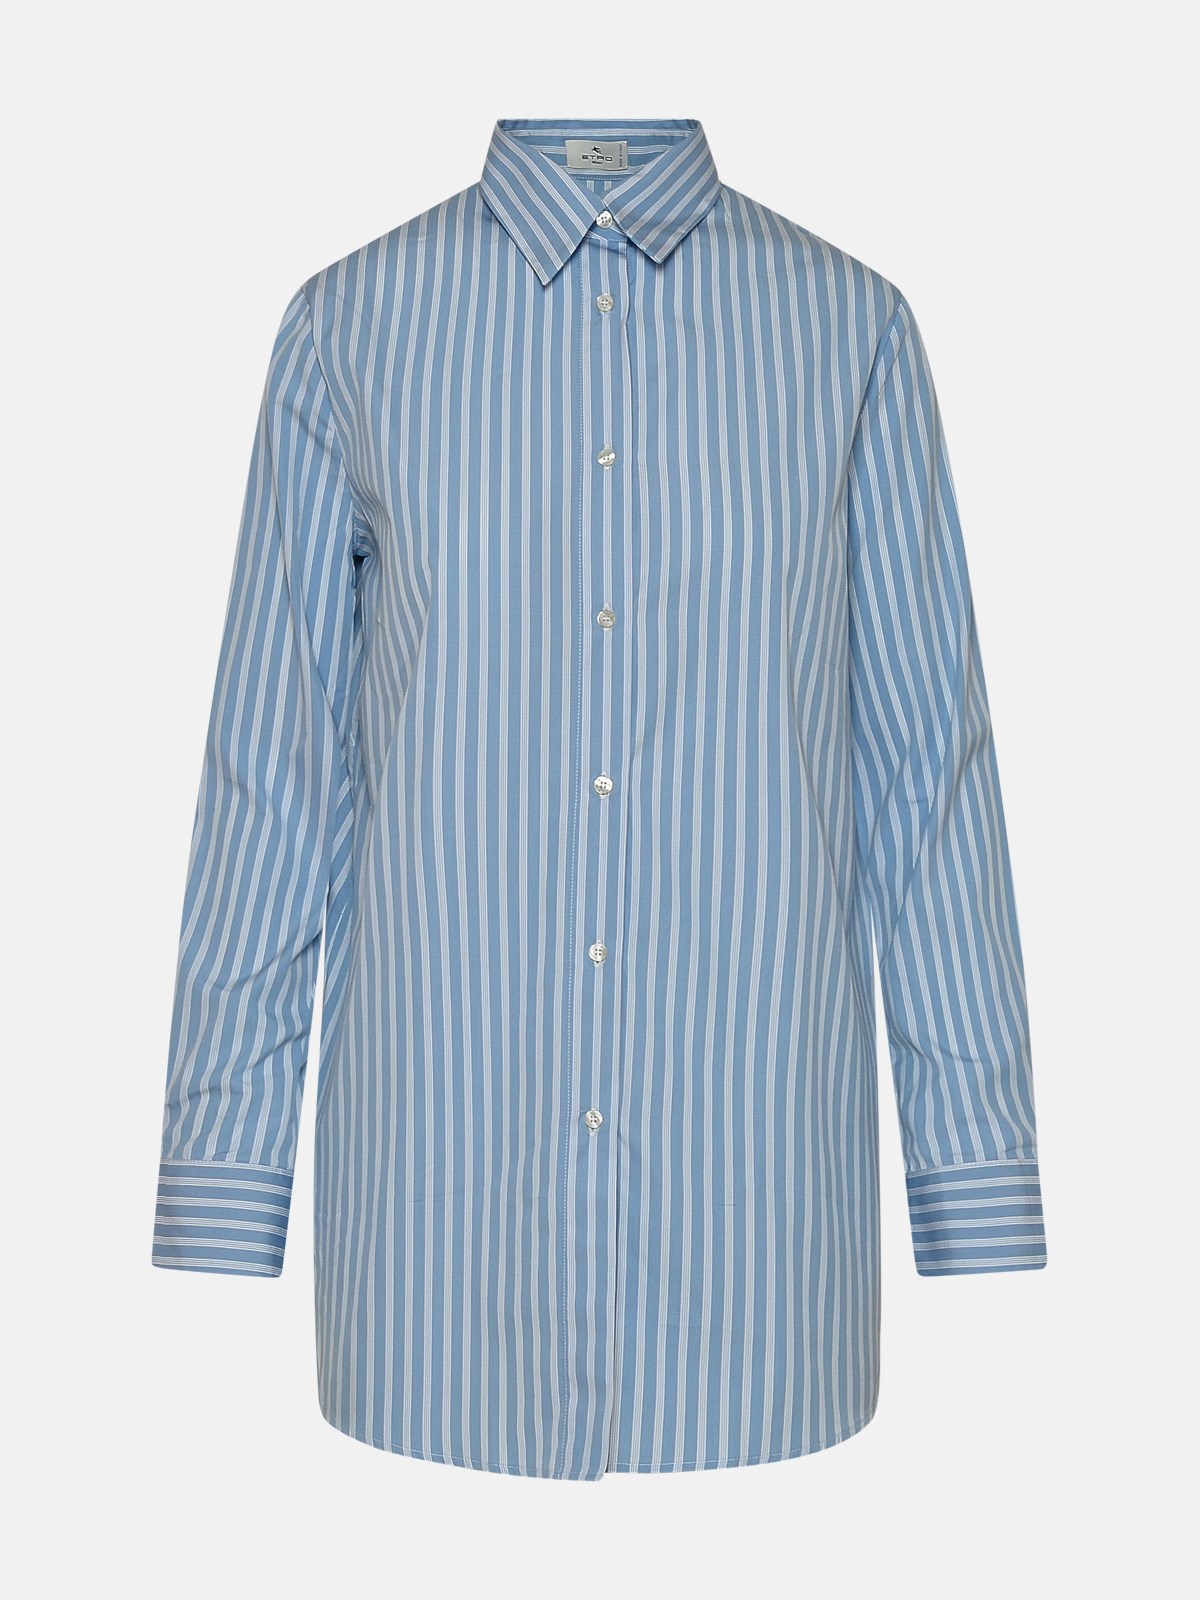 Etro Light Blue Striped Cotton Shirt